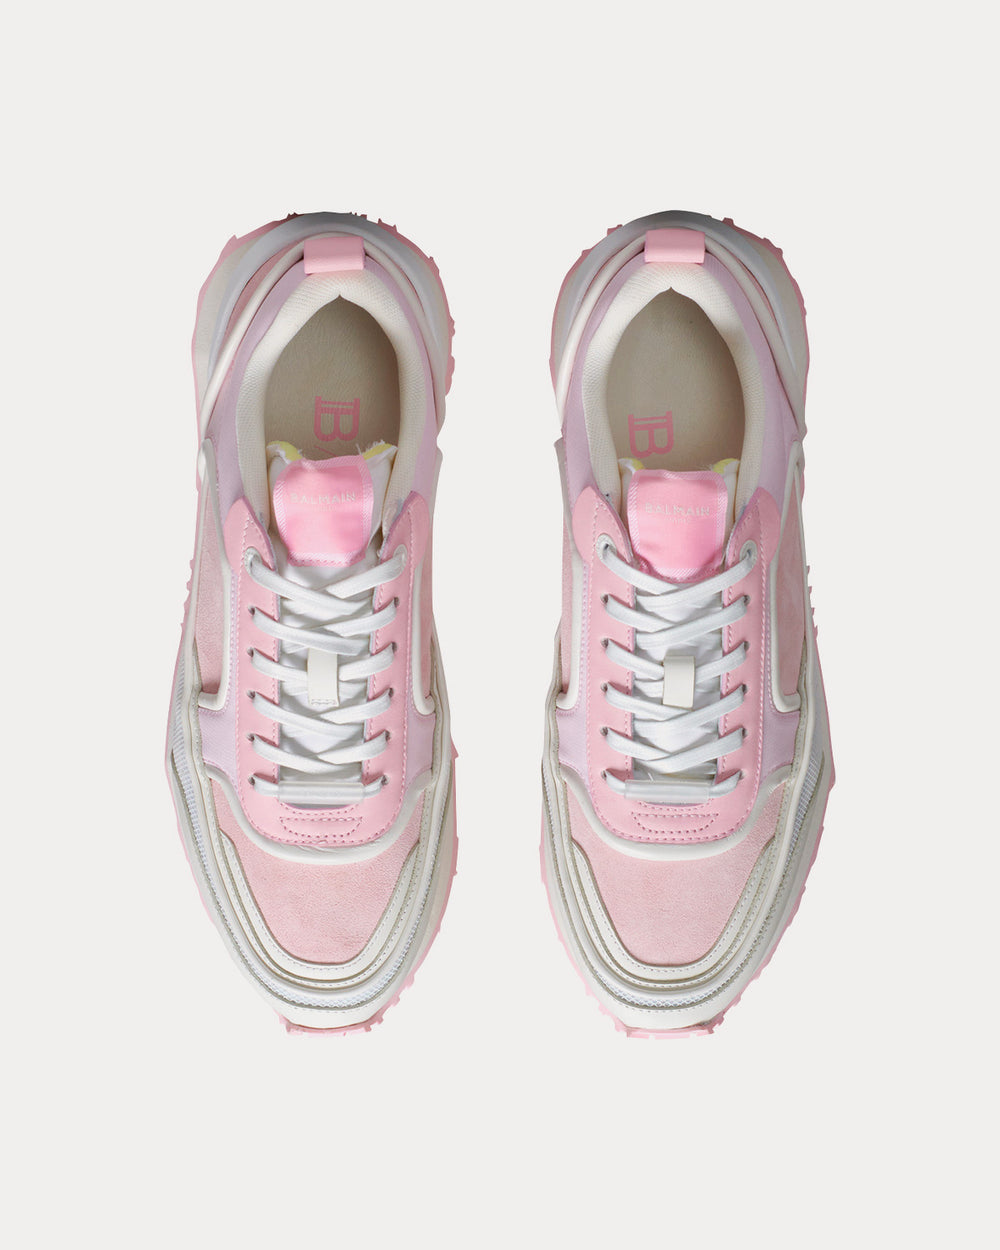 Balmain Racer Suede, Nylon & Mesh Pink Low Top Sneakers - Sneak in Peace